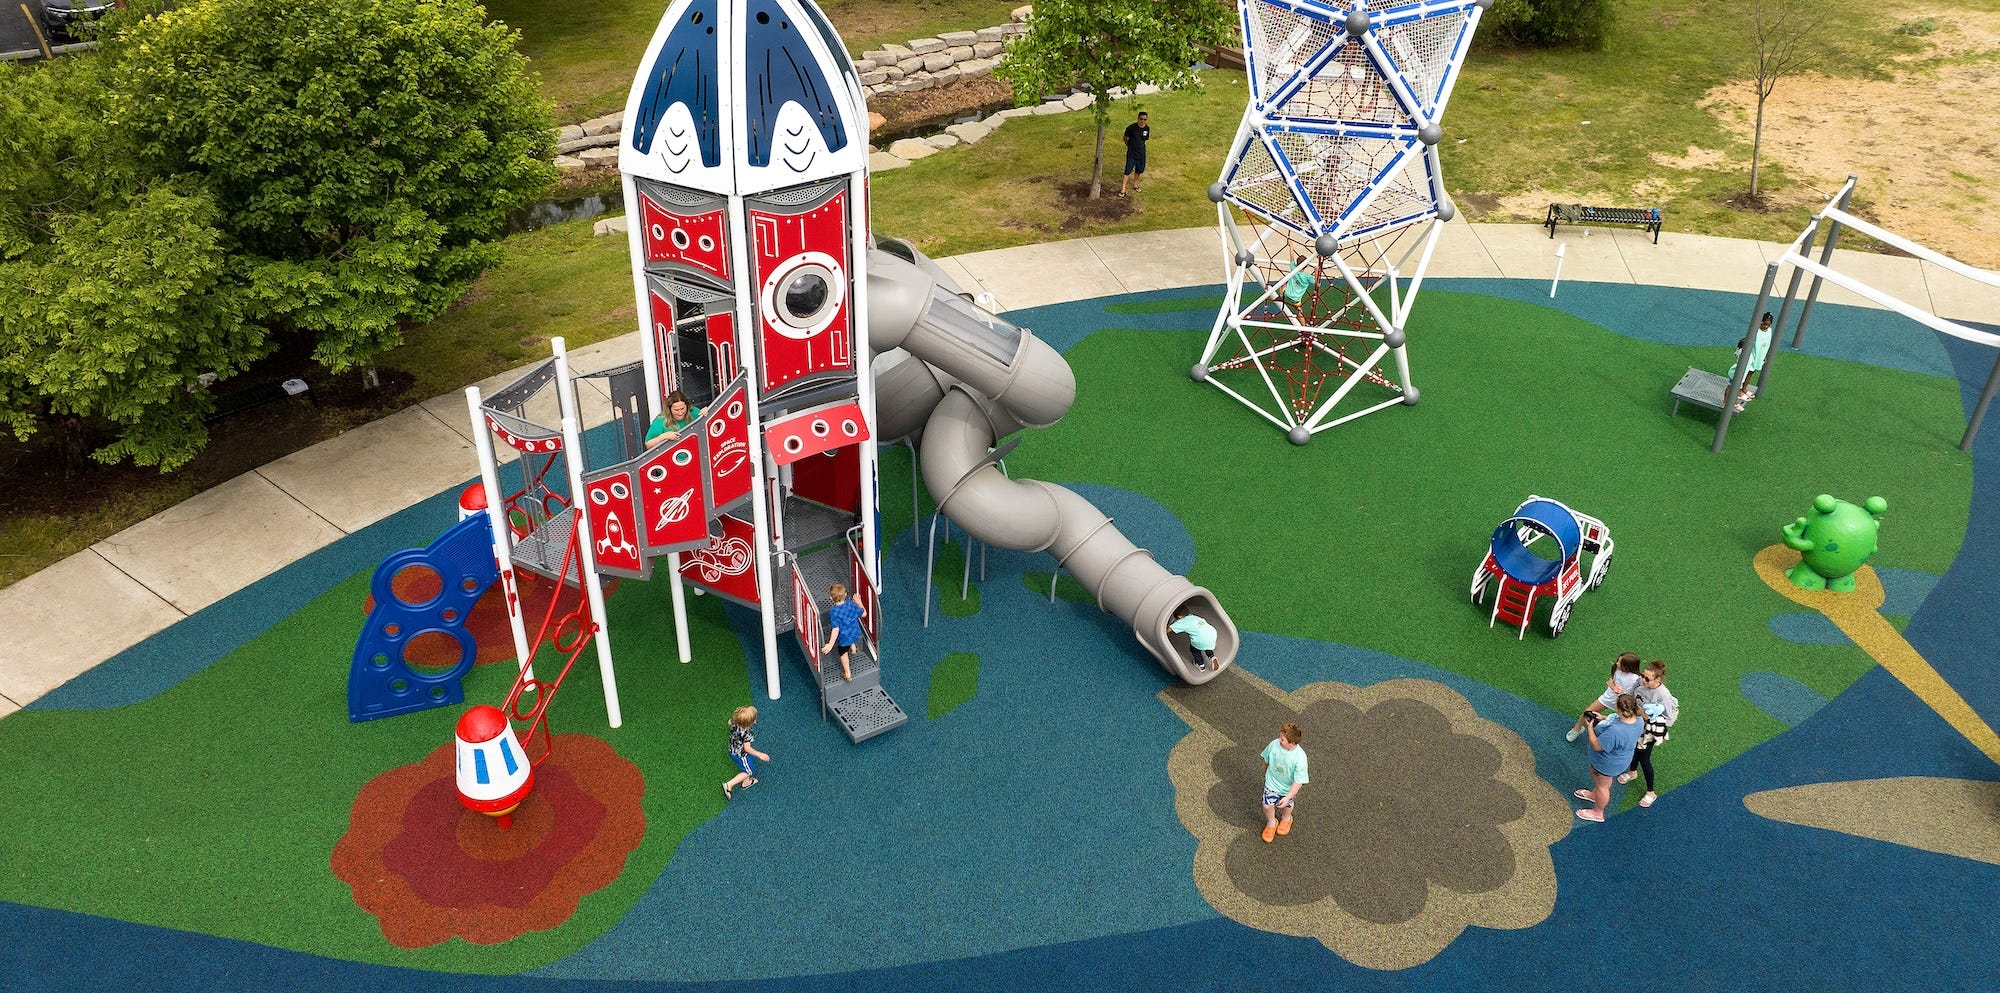 Playground with rocket ship tower and custom playground surfacing